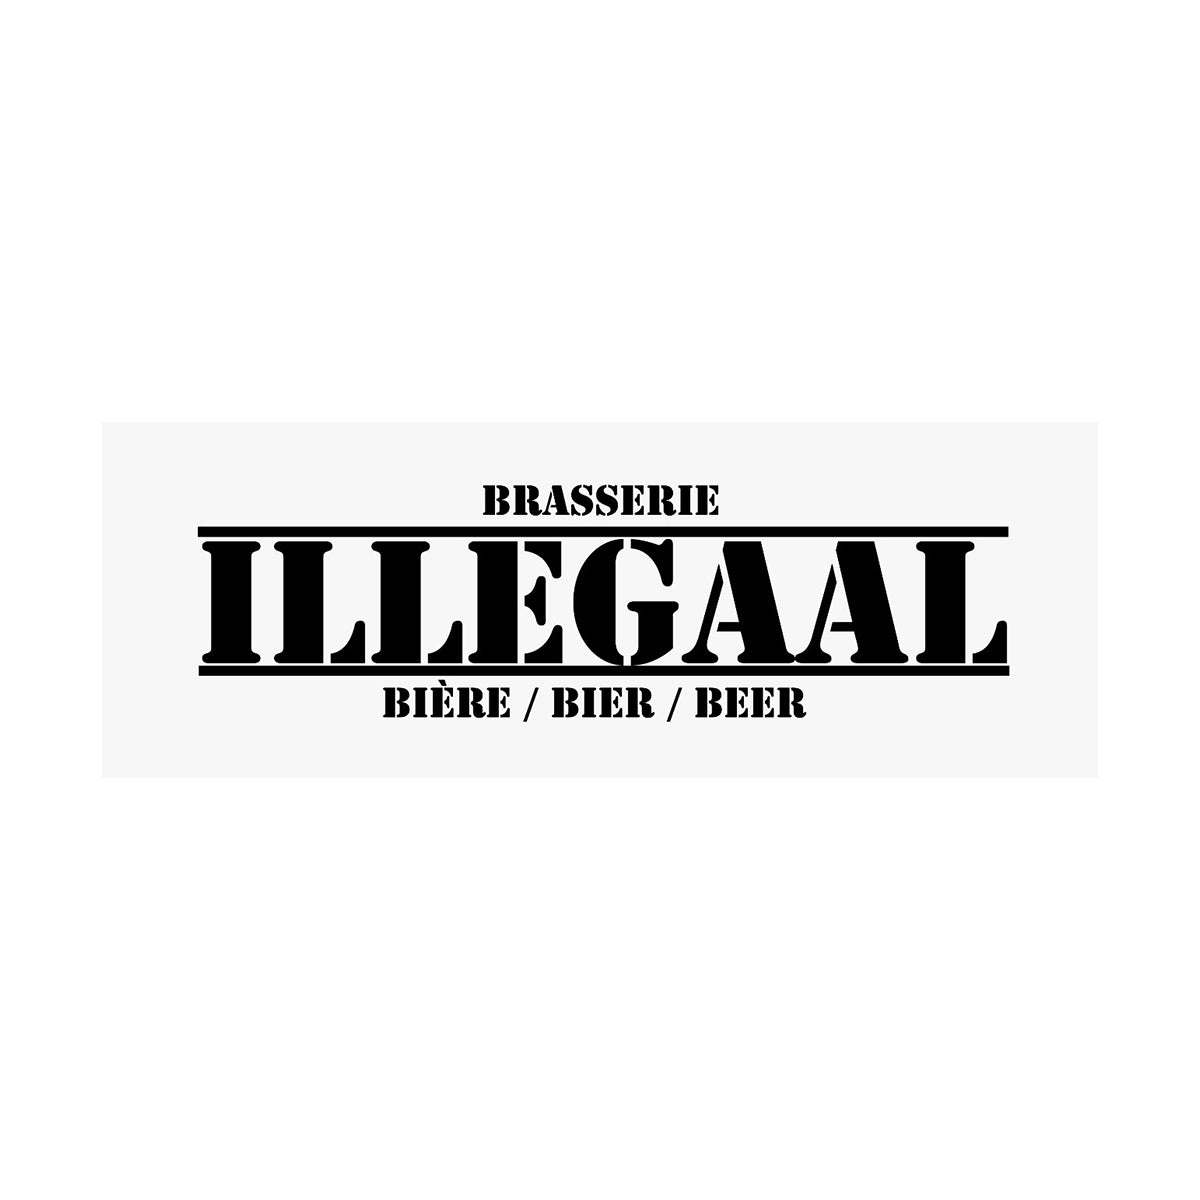 Brasserie Illegaal